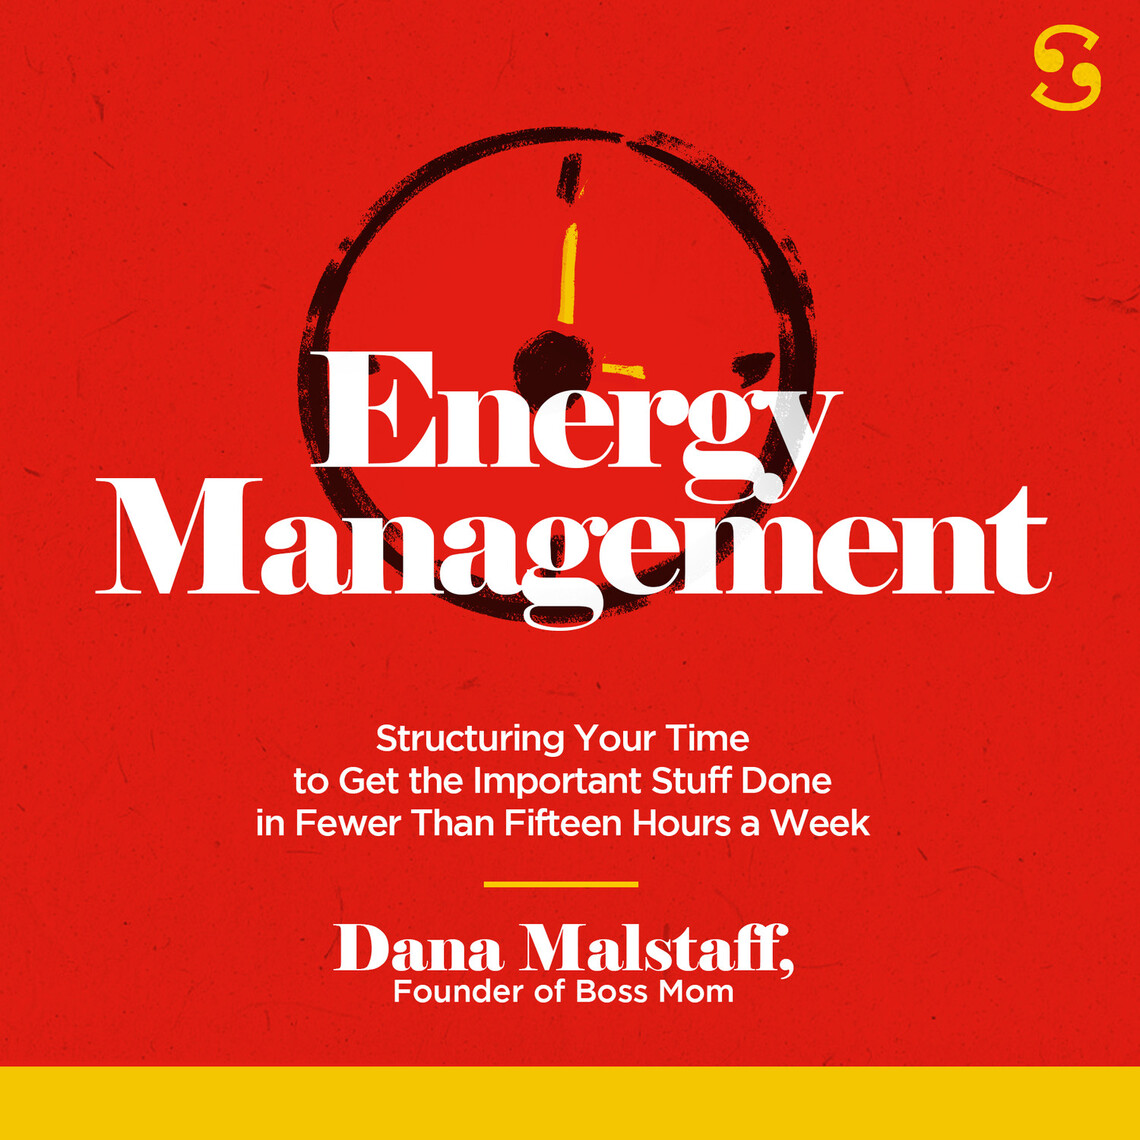 Energy Management by Dana Malstaff ...